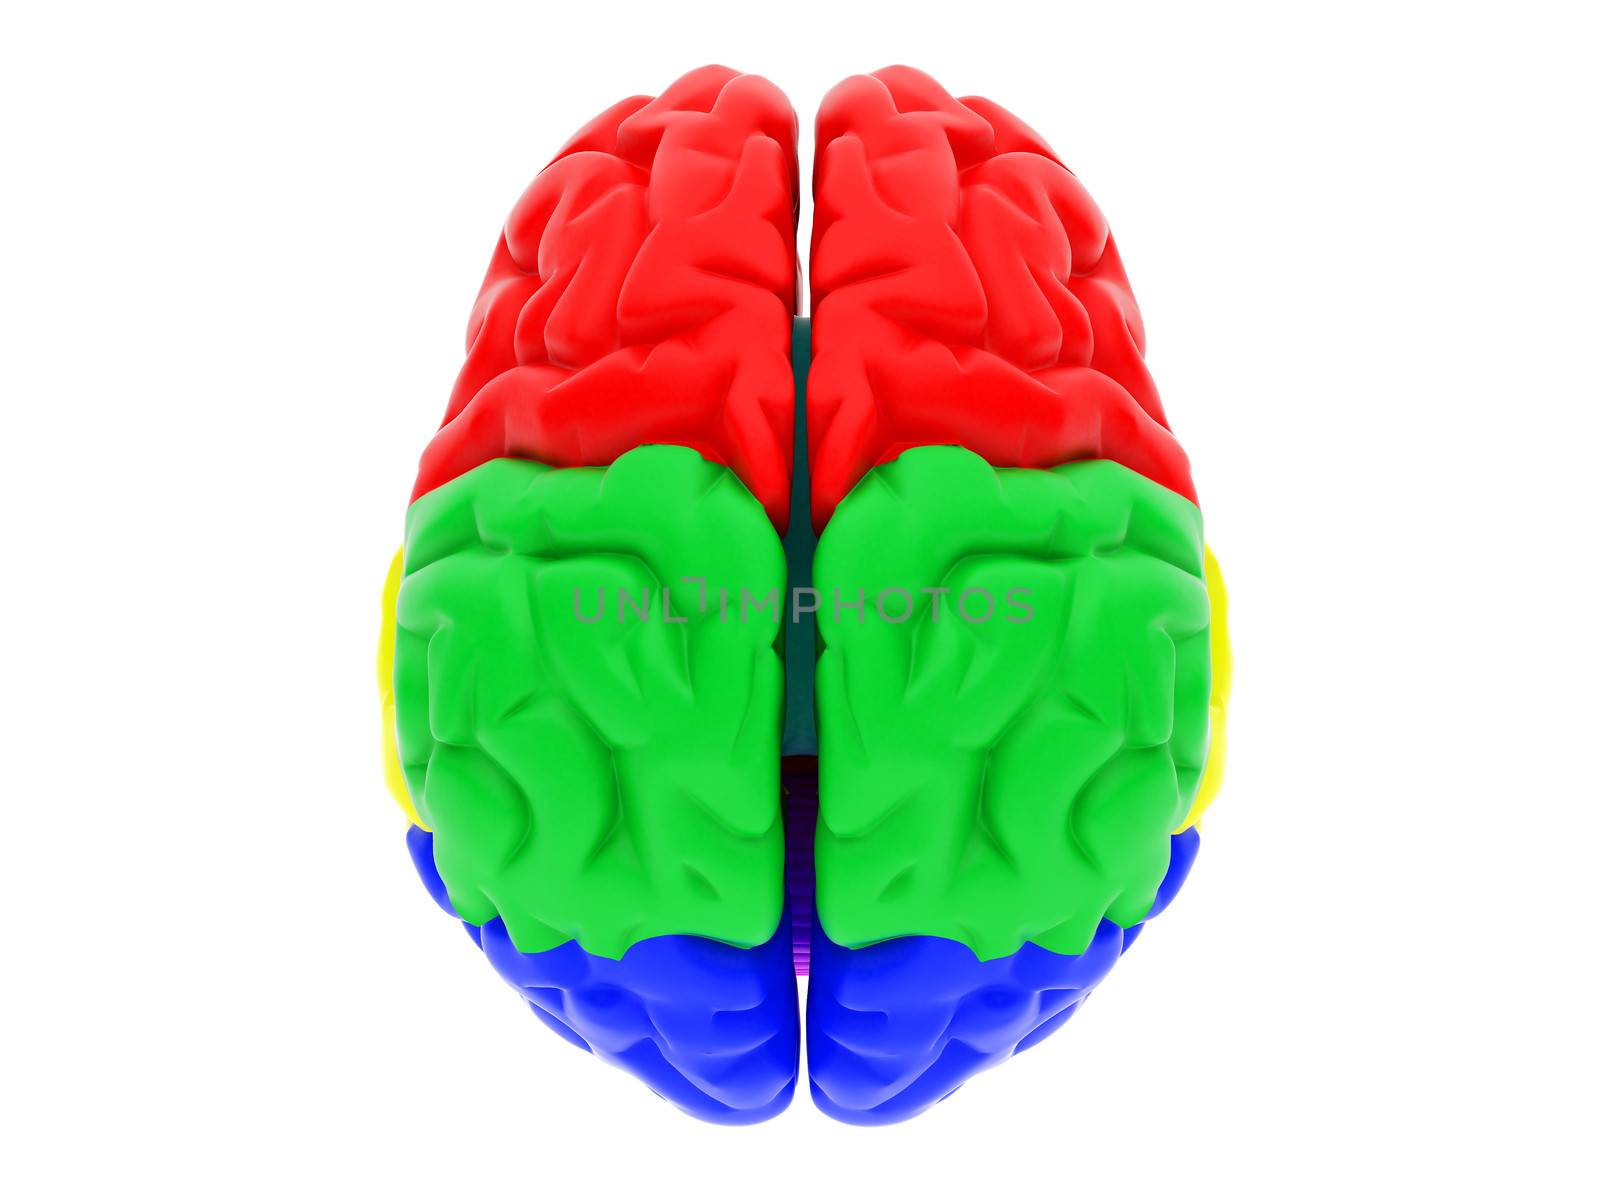 High resolution image. 3d rendered illustration. 3d human brain.